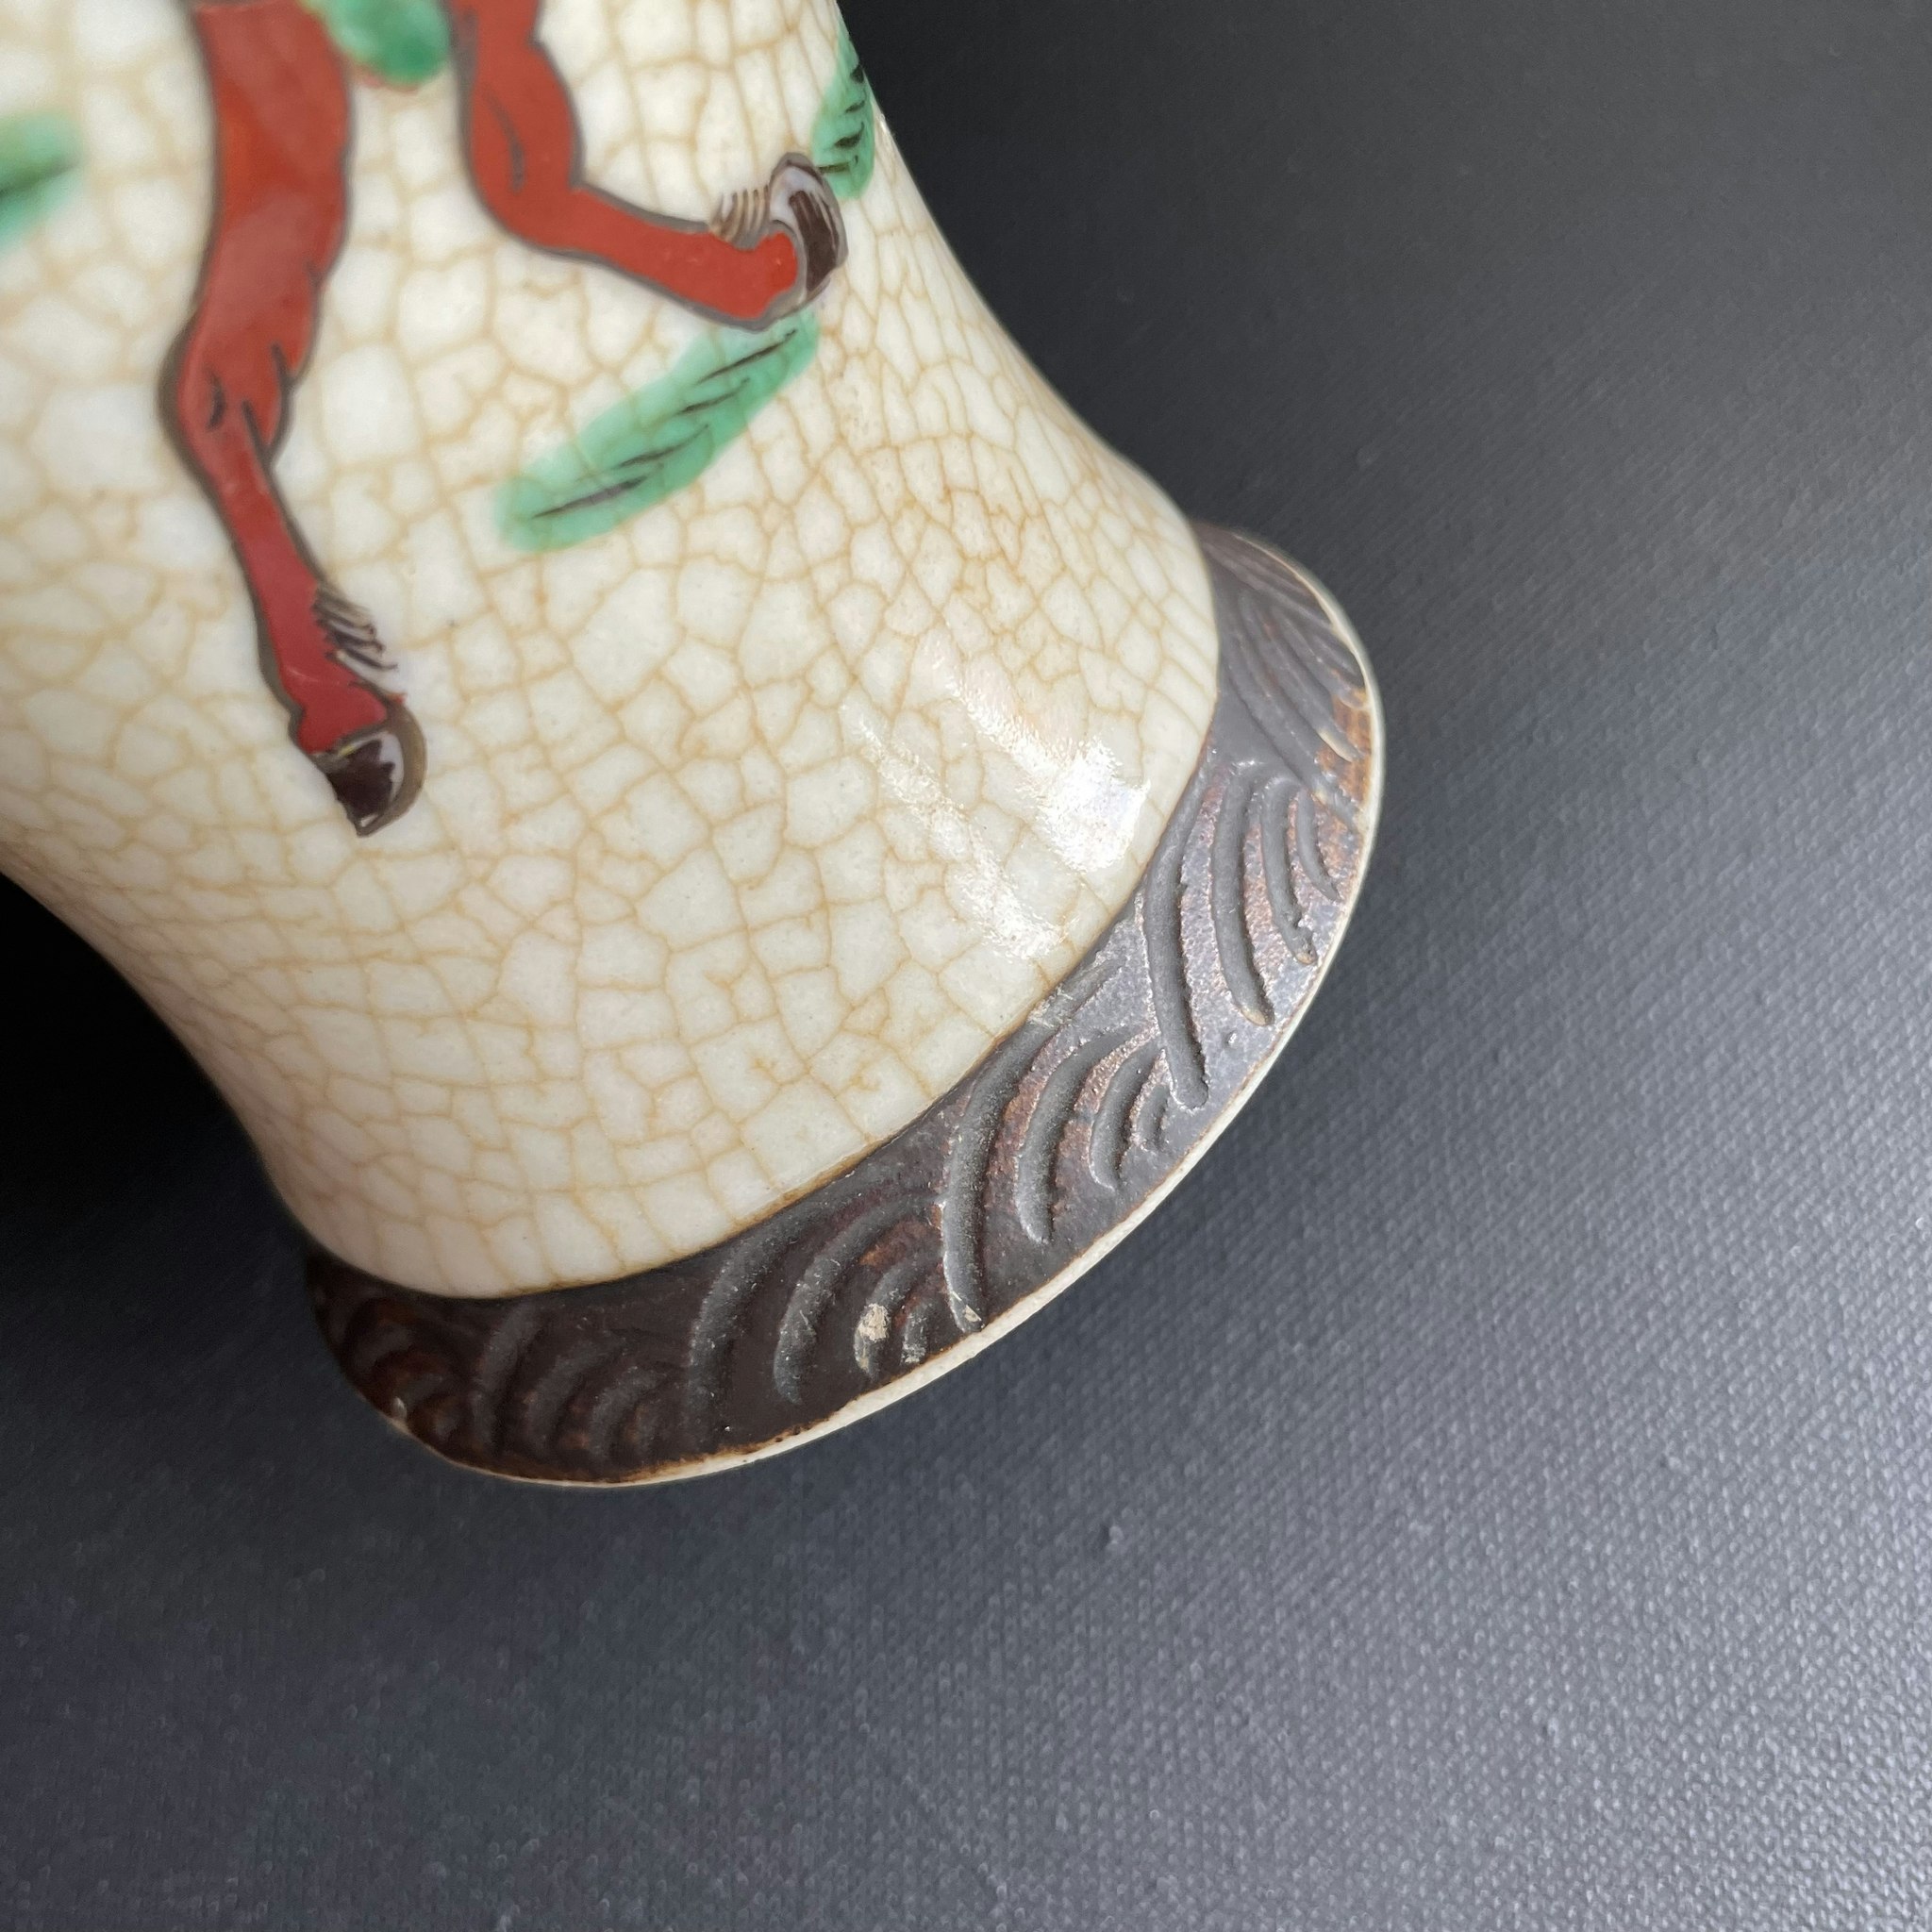 Antique Chinese Nanking crackleware vase Late Qing / Republic #1152